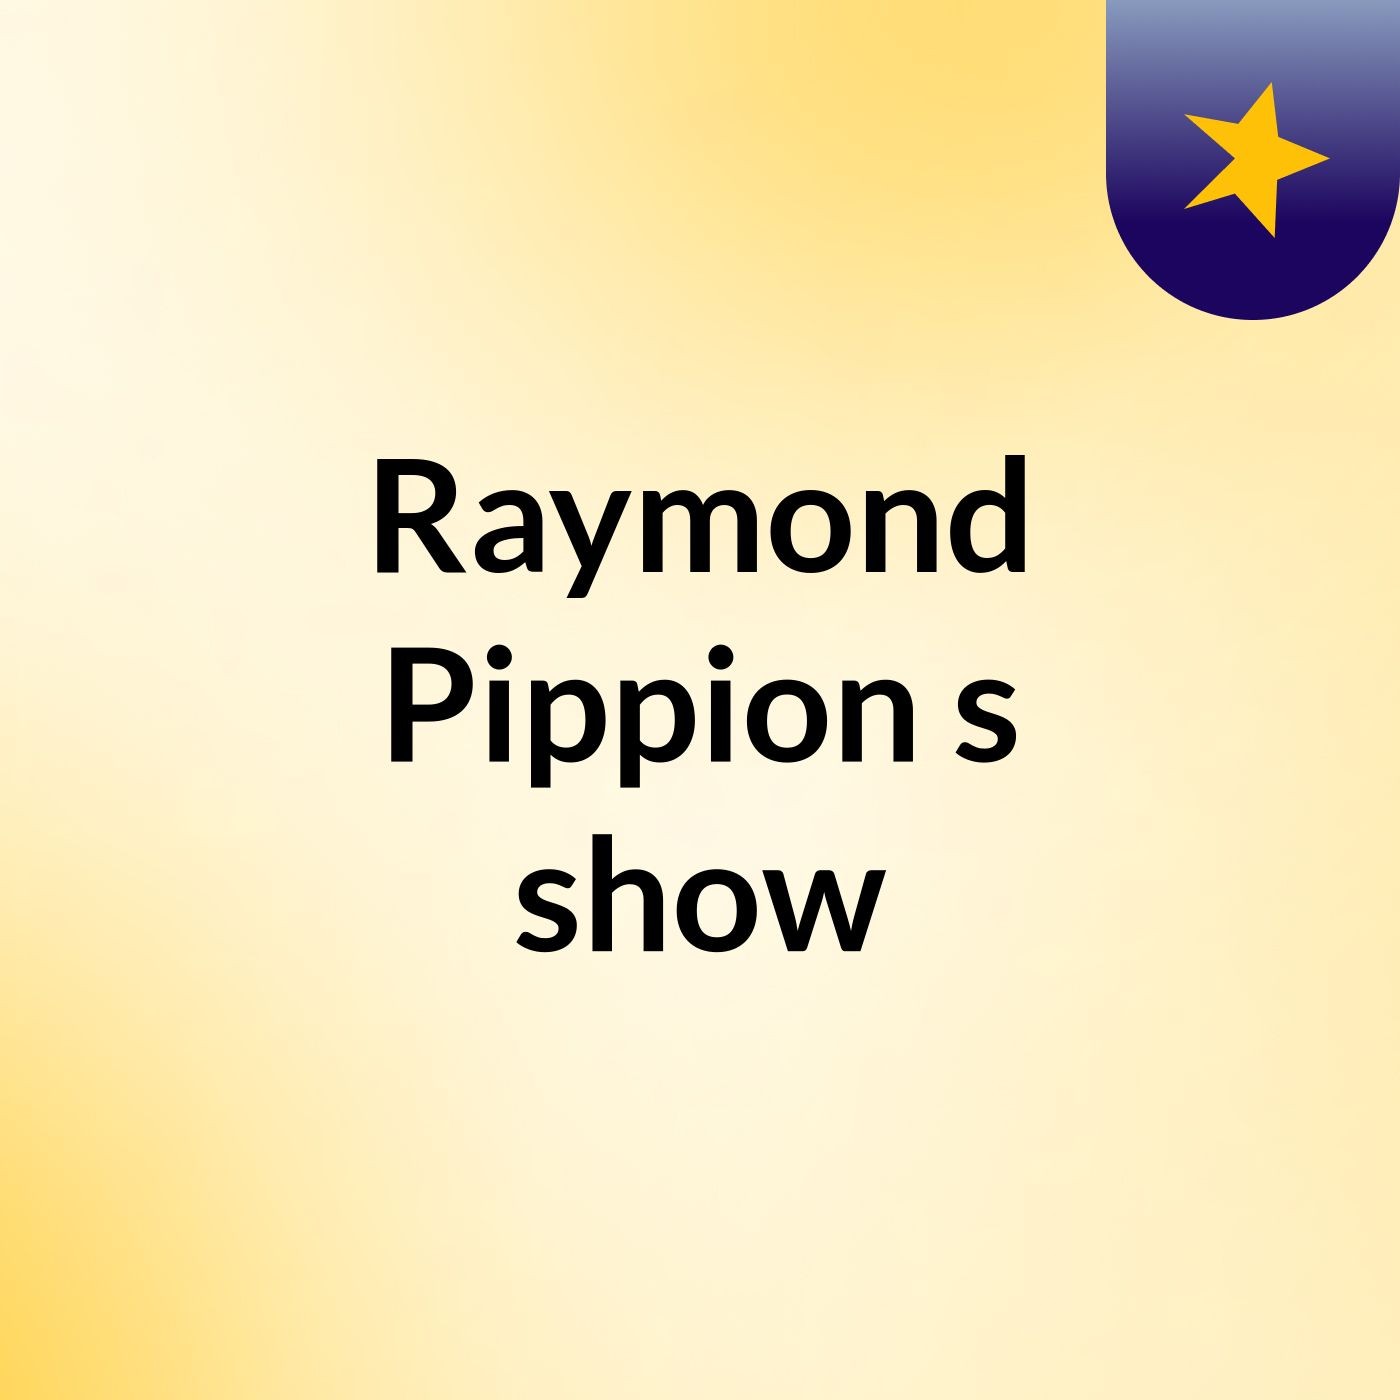 Episode 7 - Raymond Pippion's show